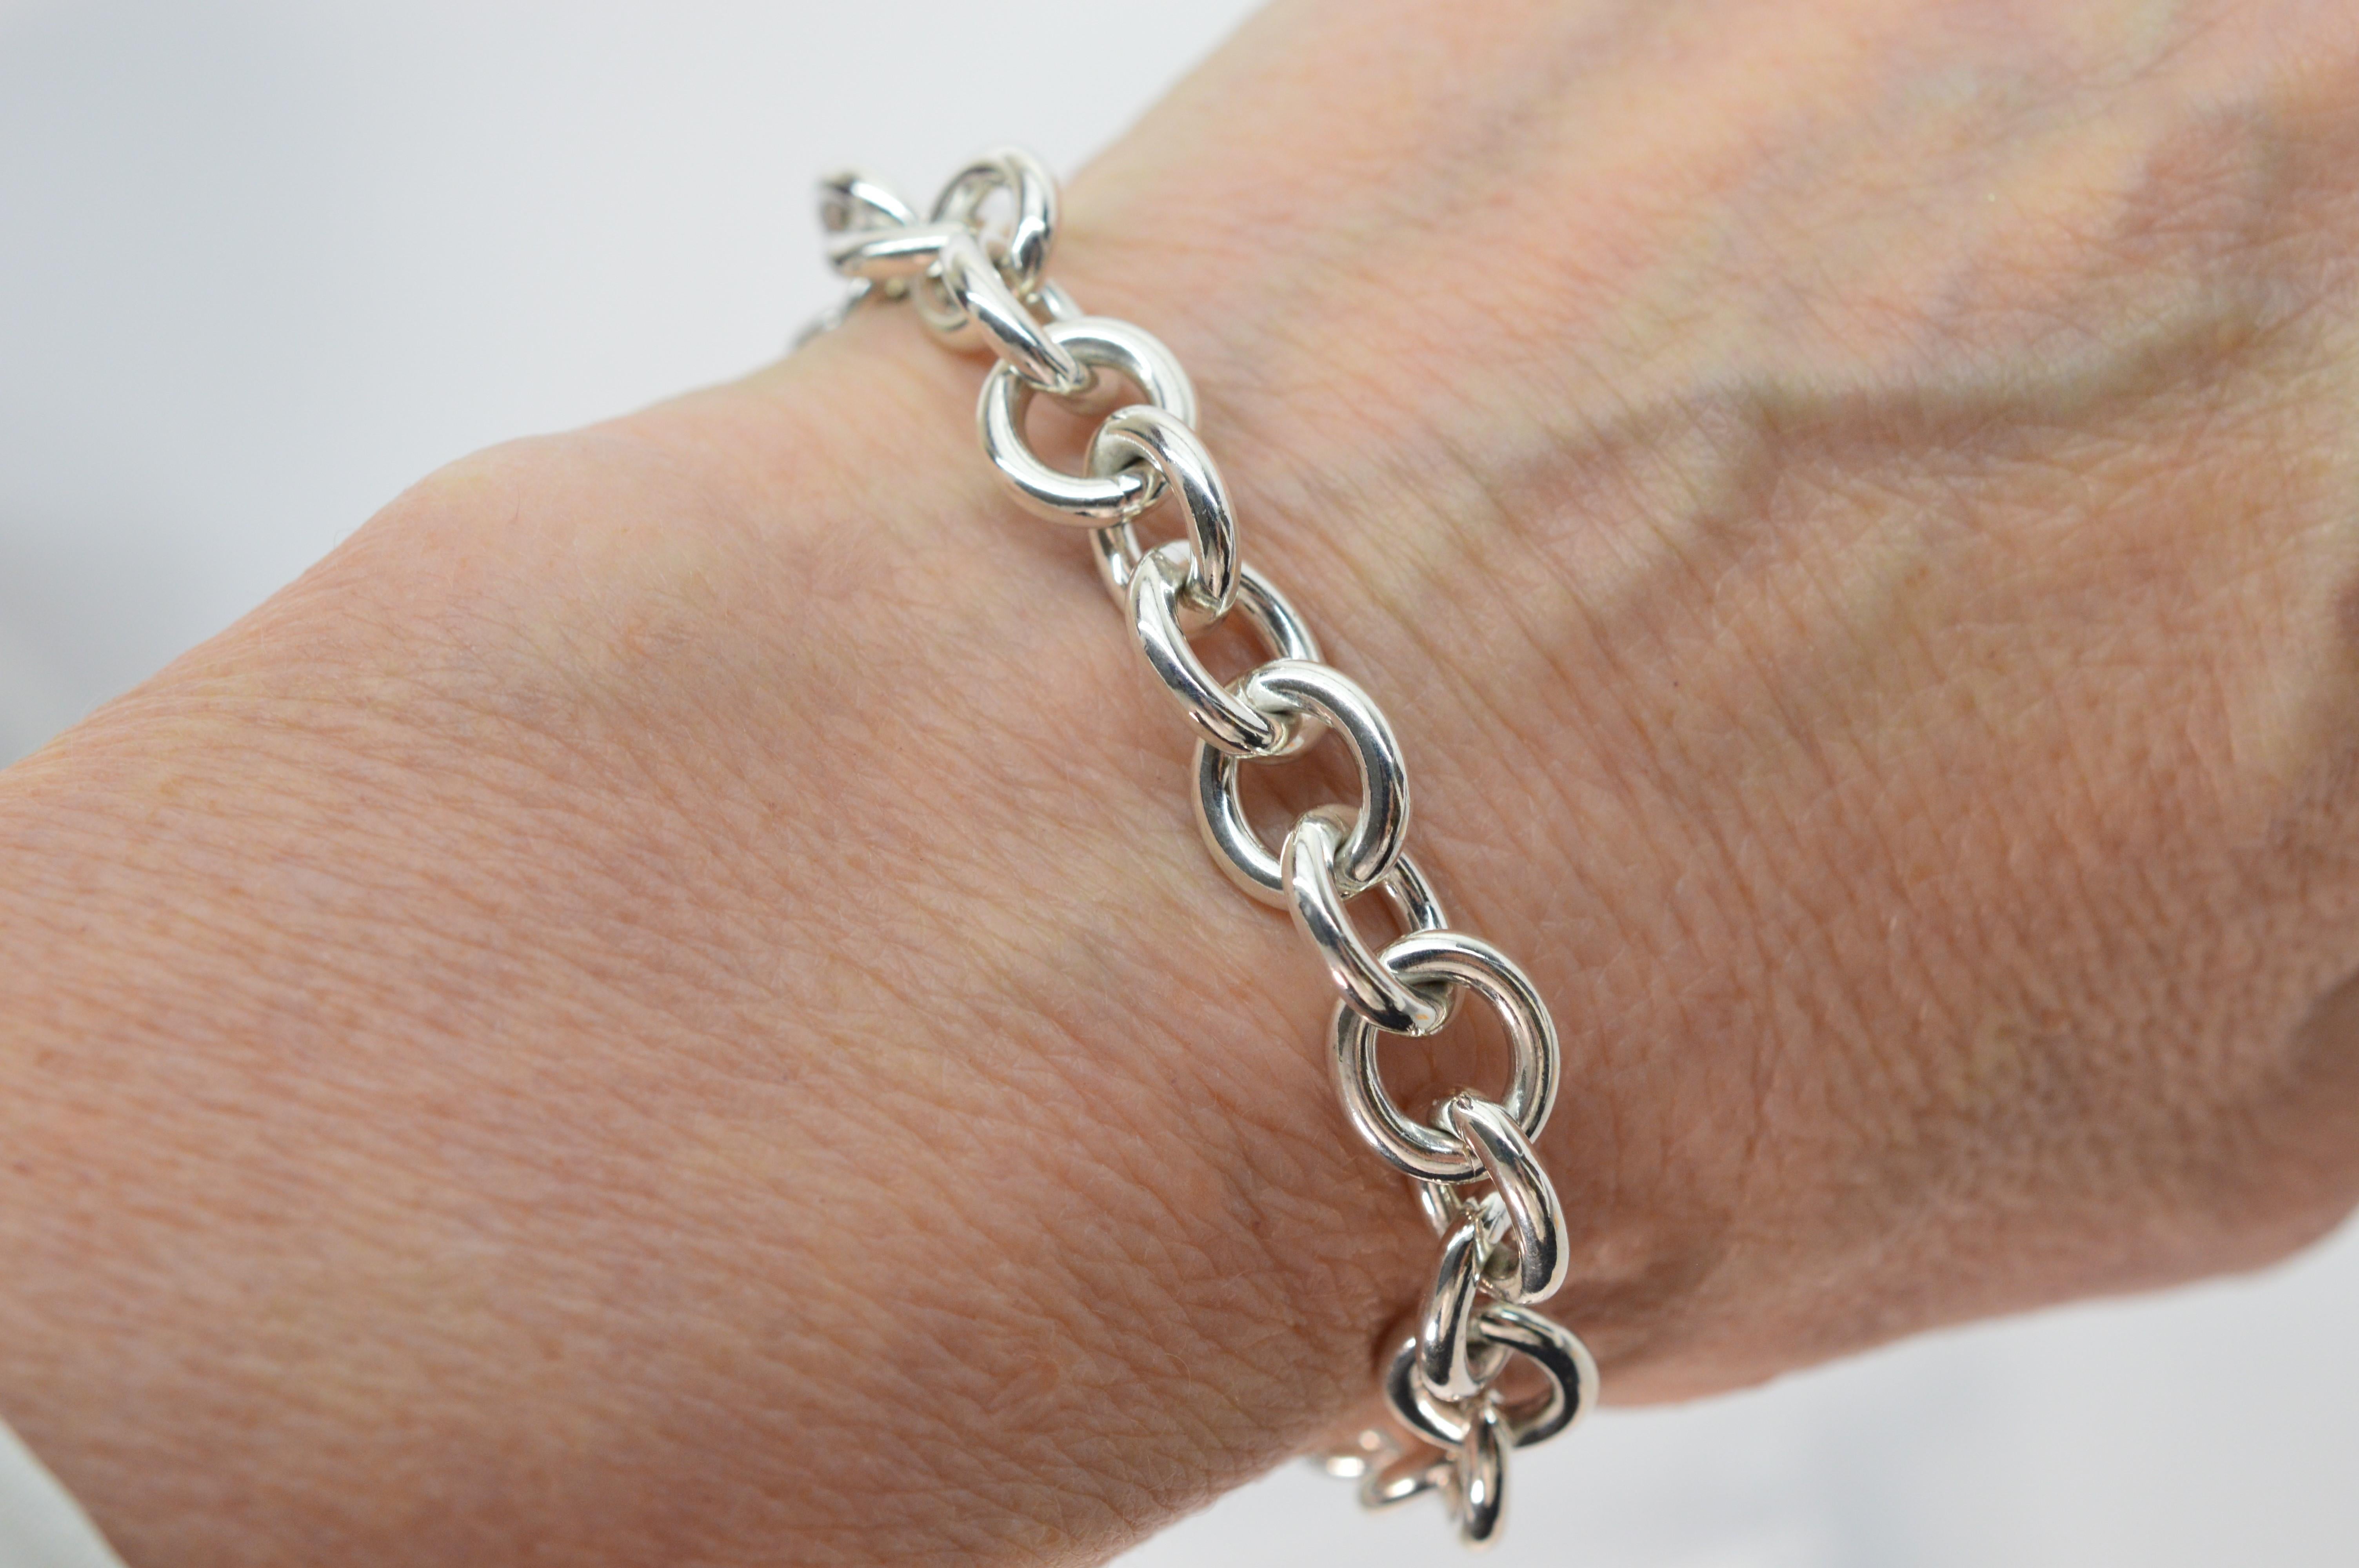 Women's Tiffany & Co. Heart Tag Charm Chain Bracelet